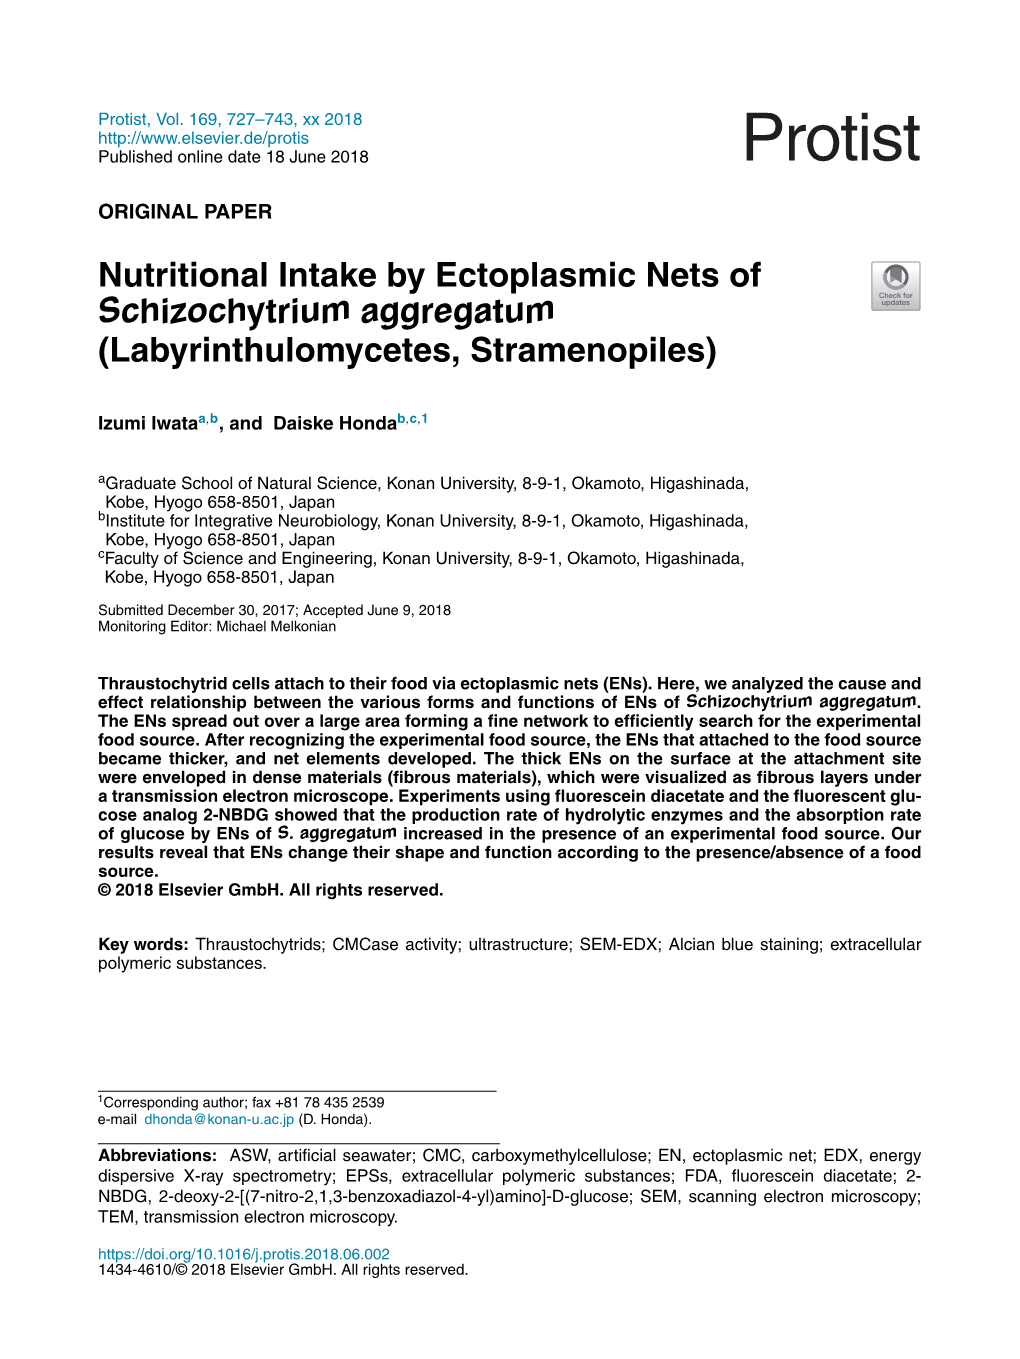 Nutritional Intake by Ectoplasmic Nets of Schizochytrium Aggregatum (Labyrinthulomycetes, Stramenopiles)